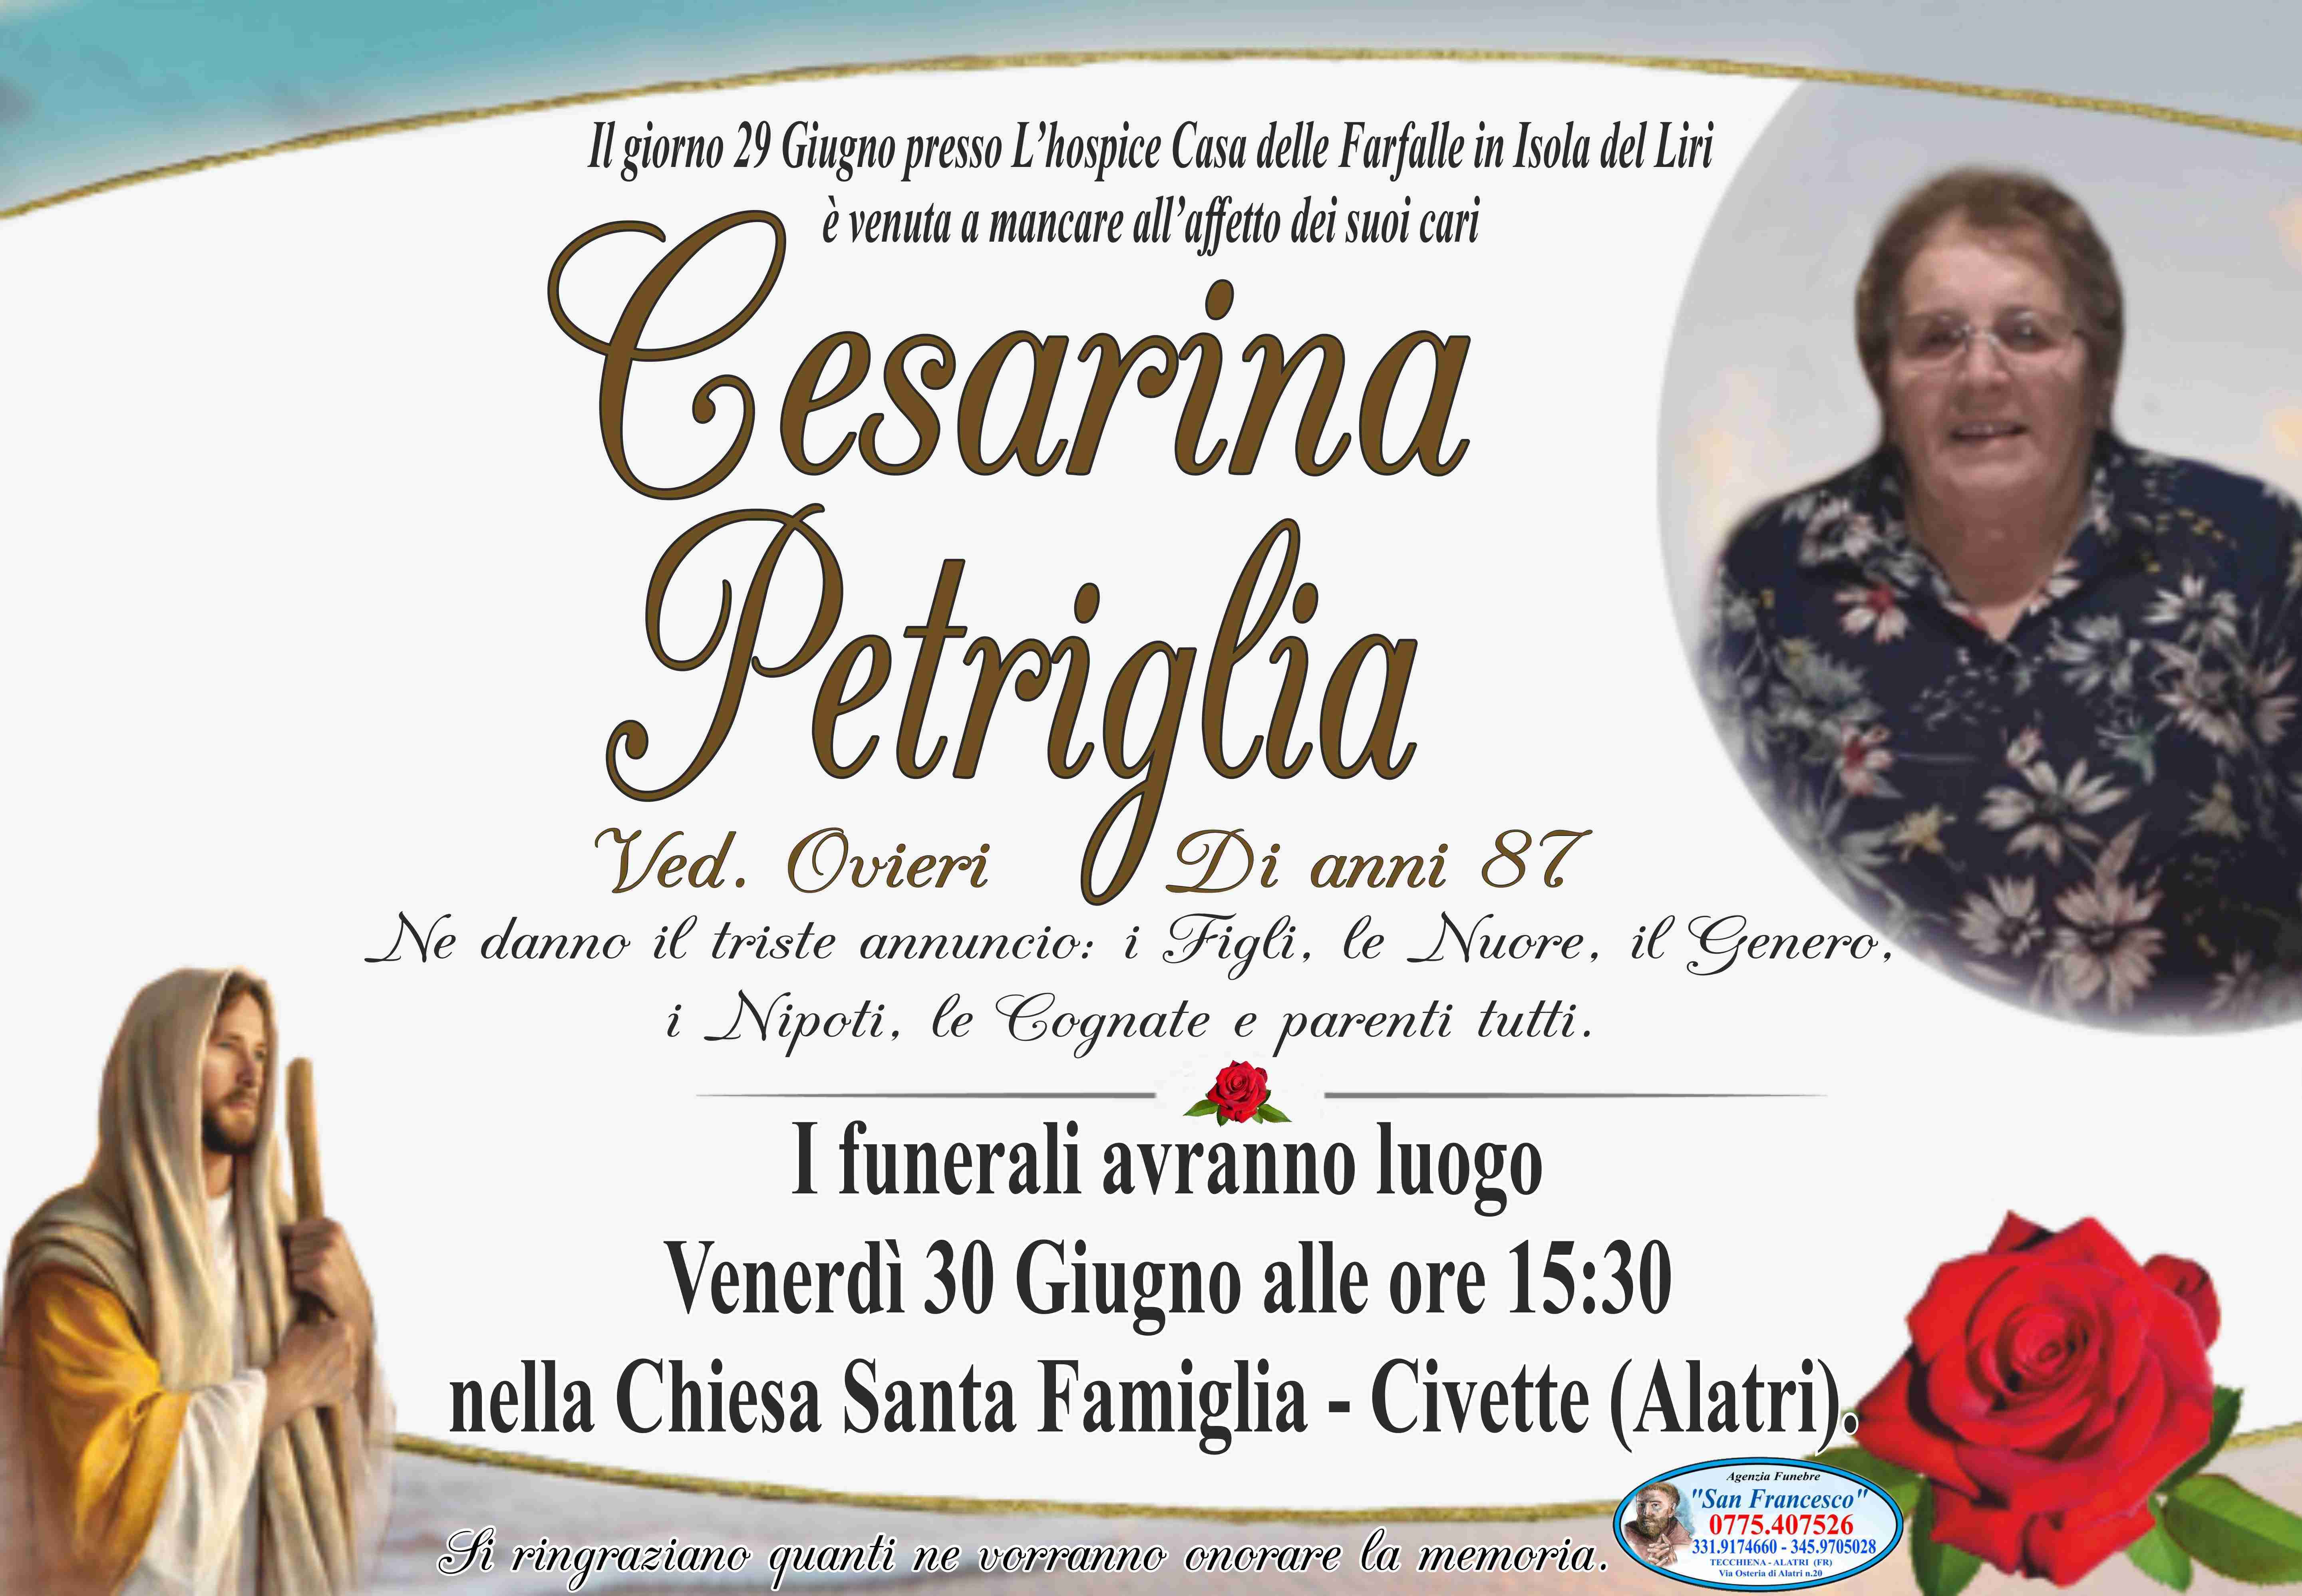 Cesarina Petriglia